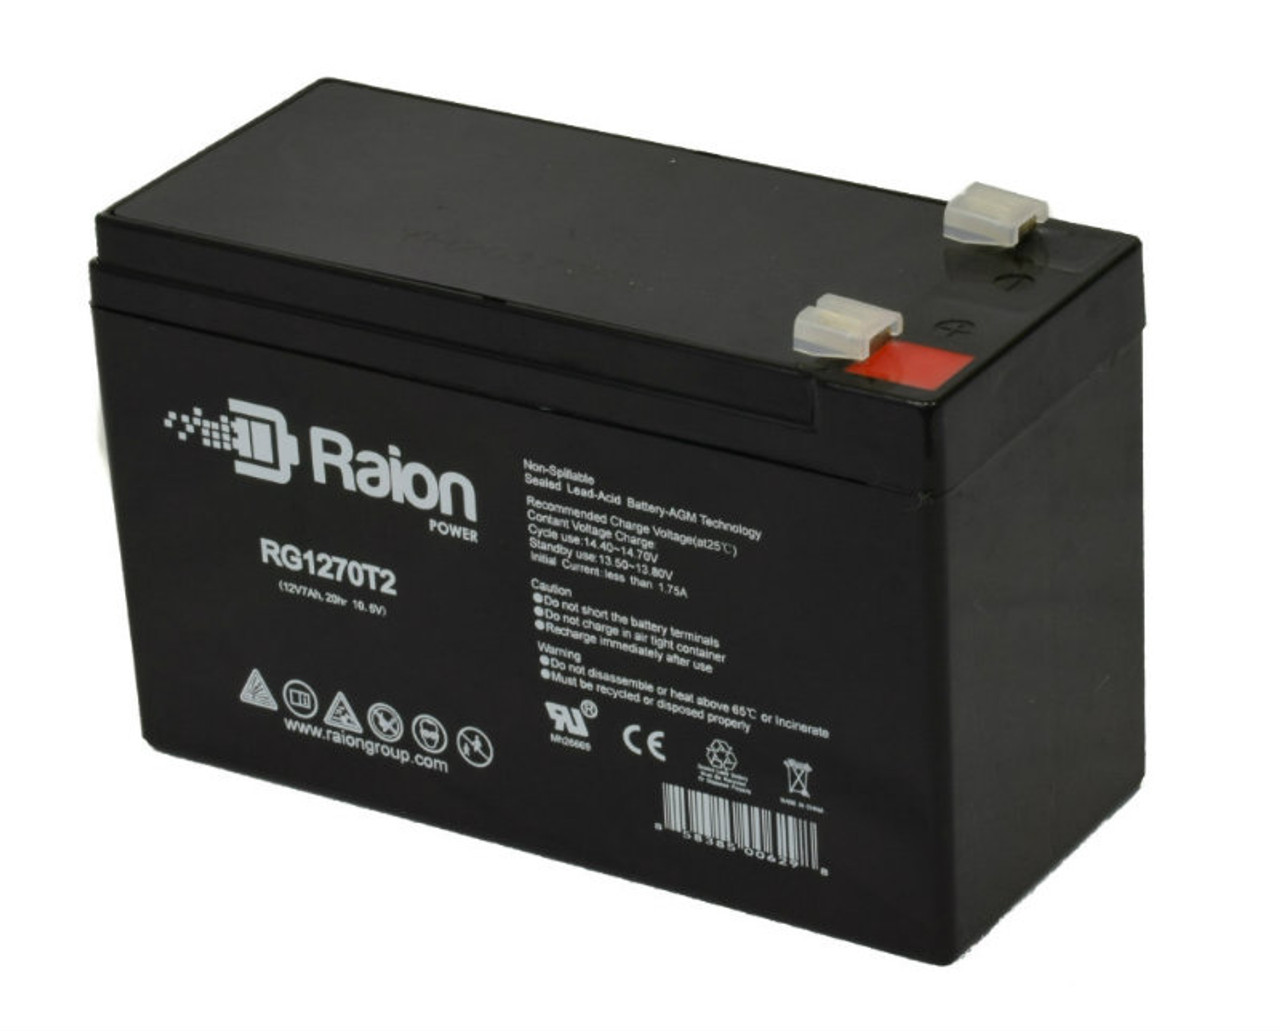 Raion Power RG1270T1 12V 7Ah Non-Spillable Replacement Battery for Unikor MxVolta VT1207 F1